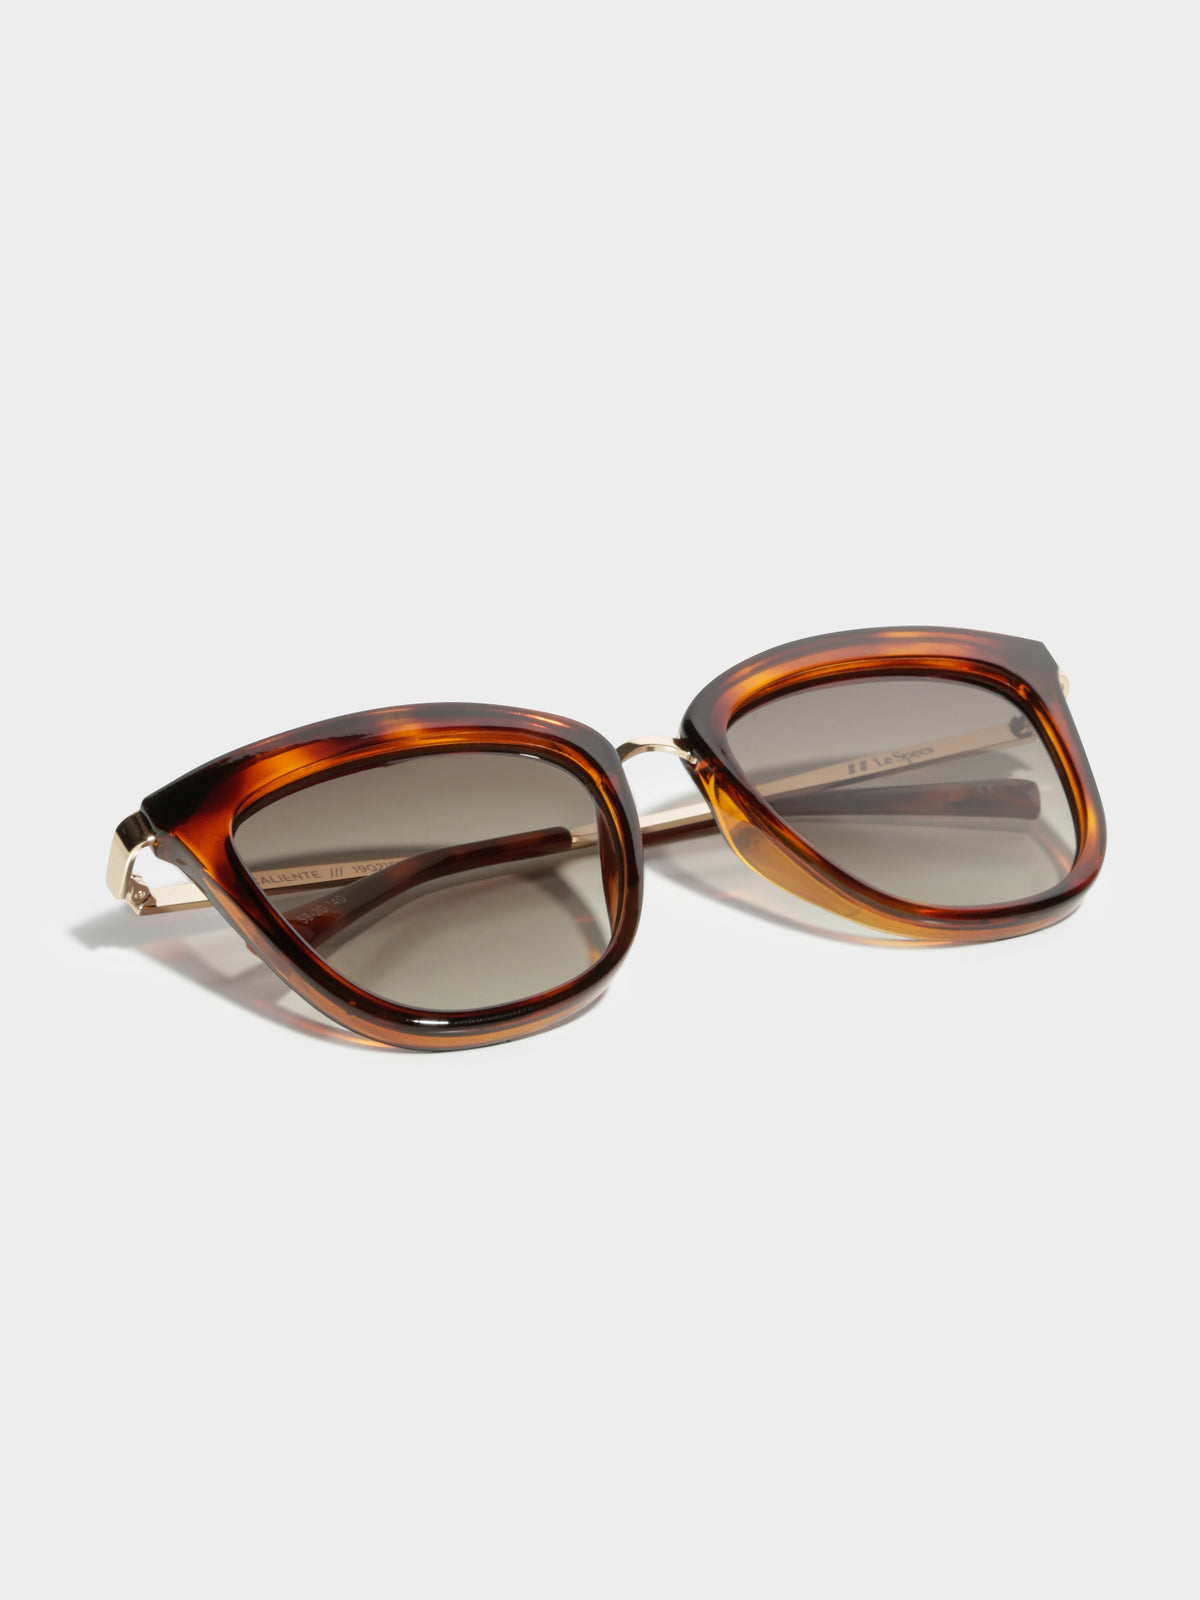 Caliente Sunglasses in Tortoiseshell &amp; Toffee